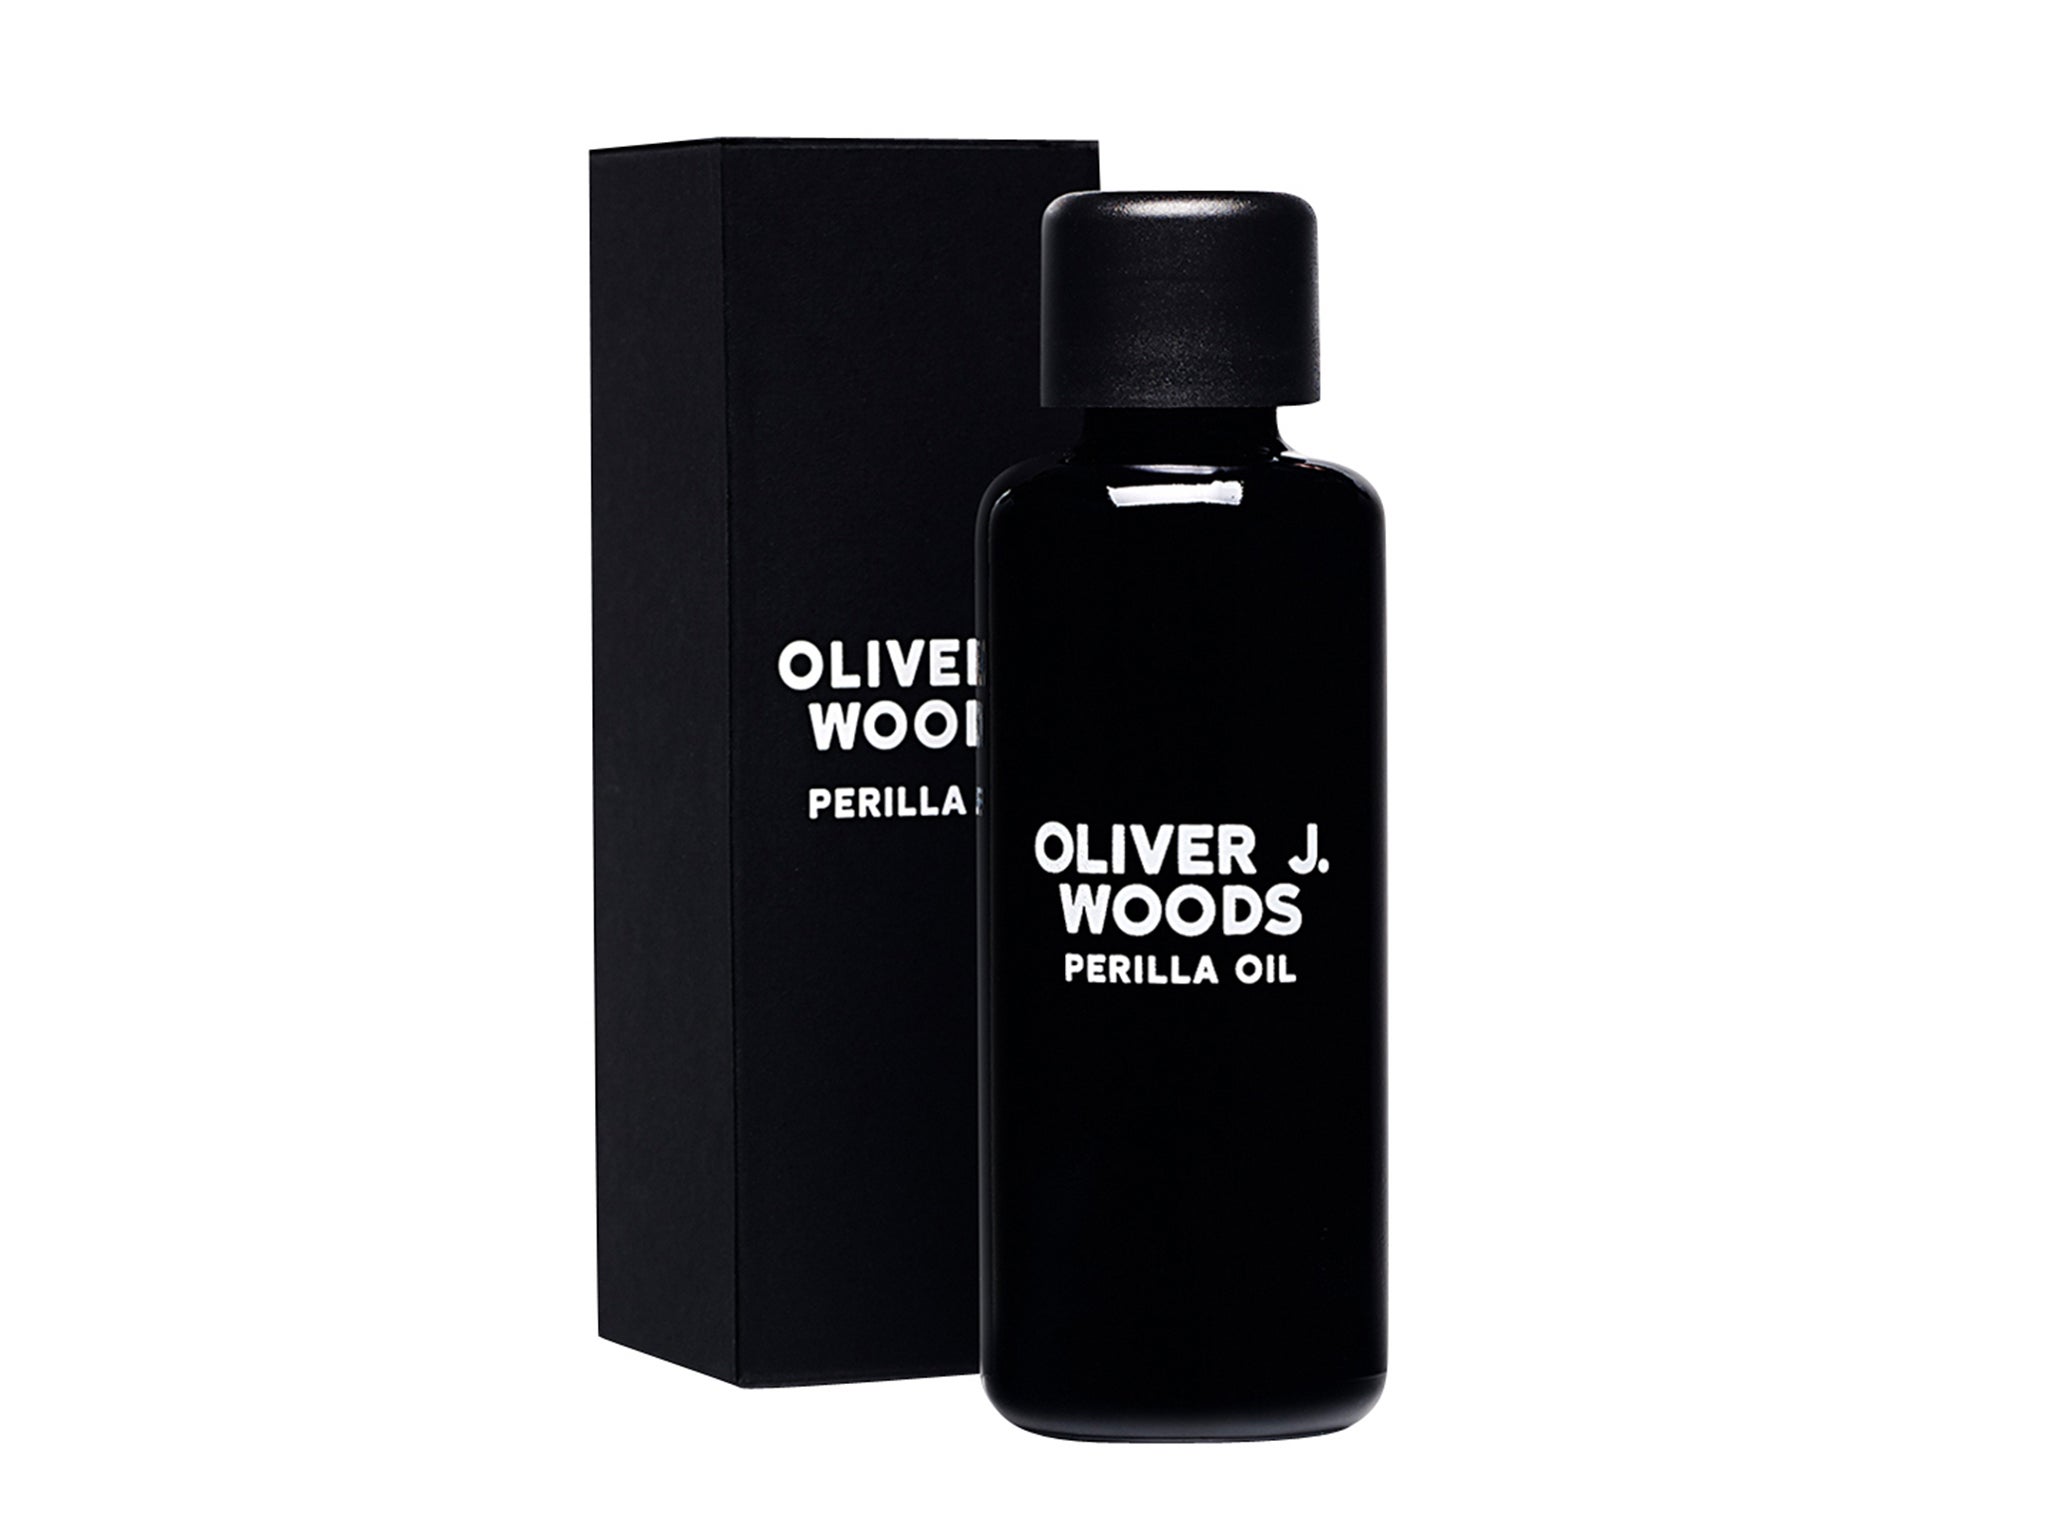 Oliver-J-Woods-indybest-best-mens-grooming-gift-indybest.jpg